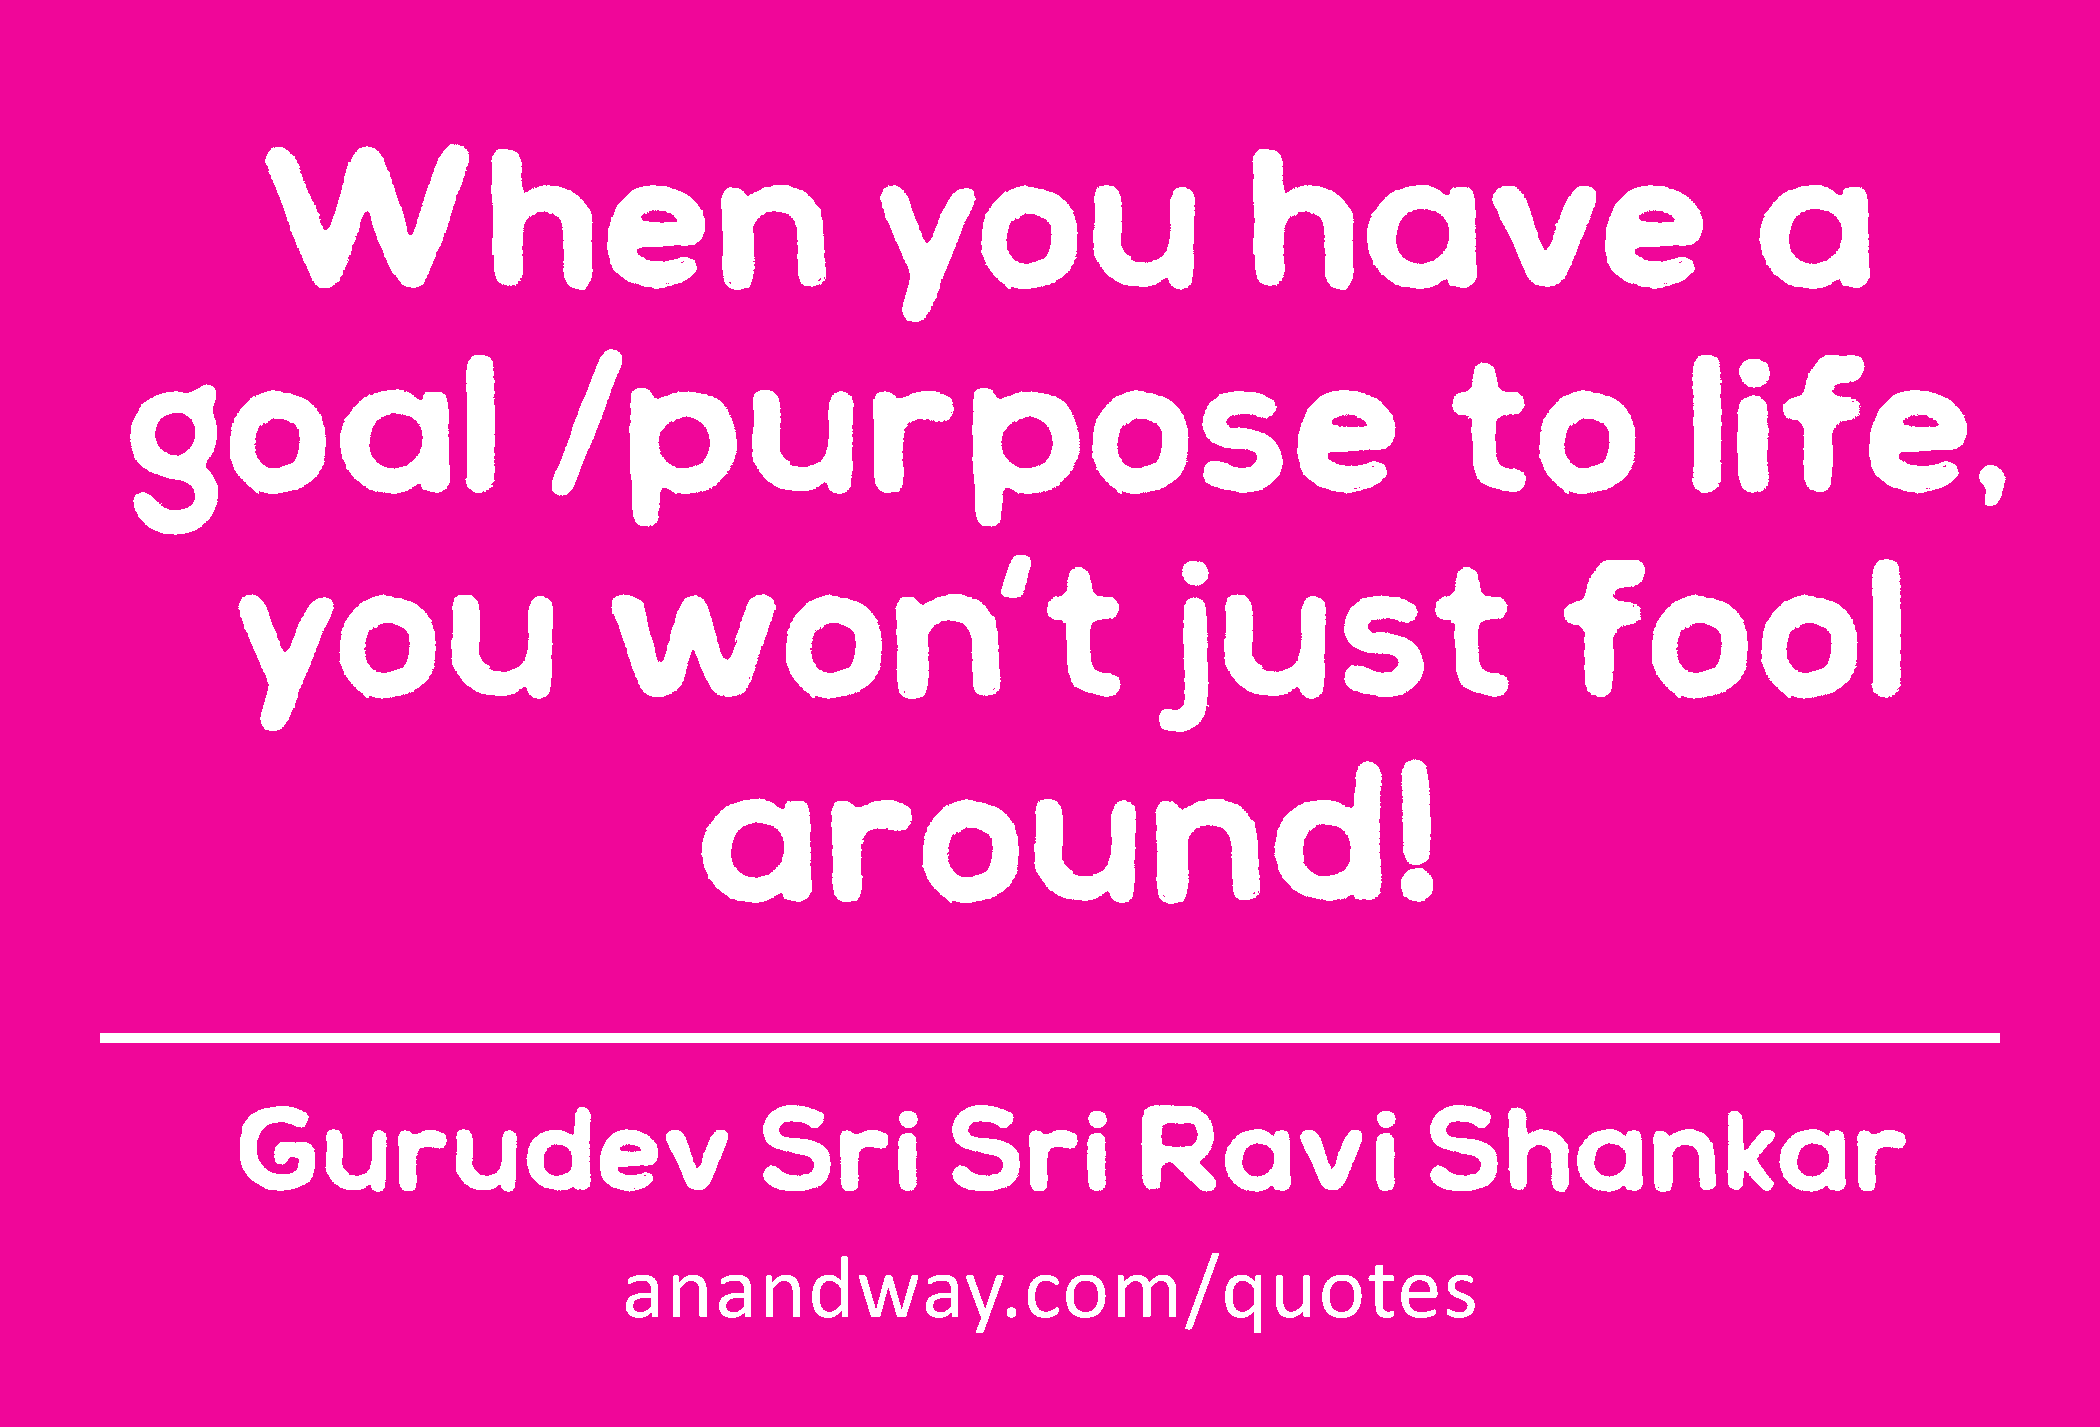 When you have a goal /purpose to life, you won't just fool around! 
 -Gurudev Sri Sri Ravi Shankar